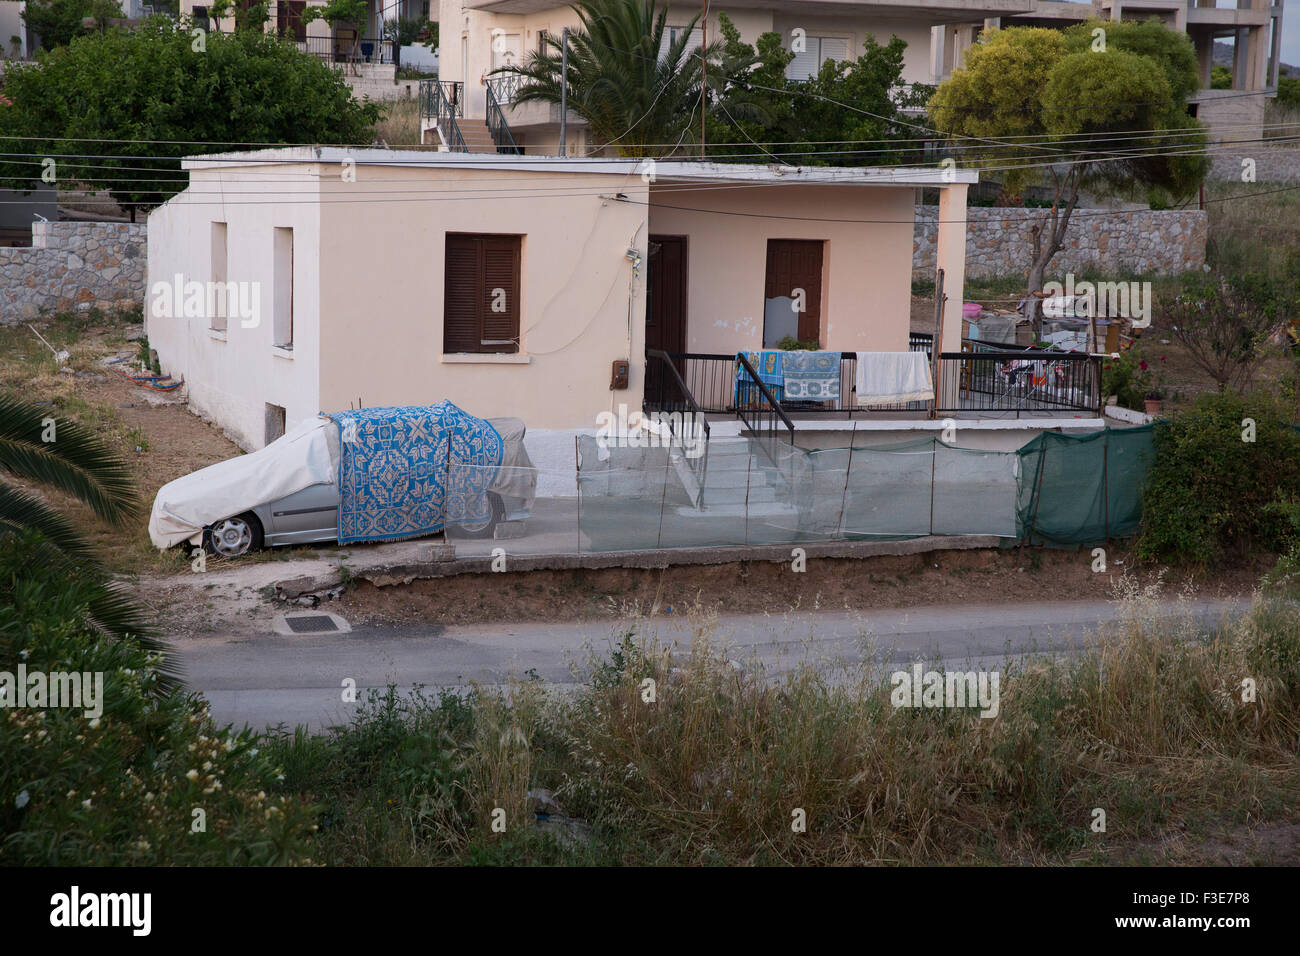 Stucco home with carport in Lefkakia, Greece Stock Photo